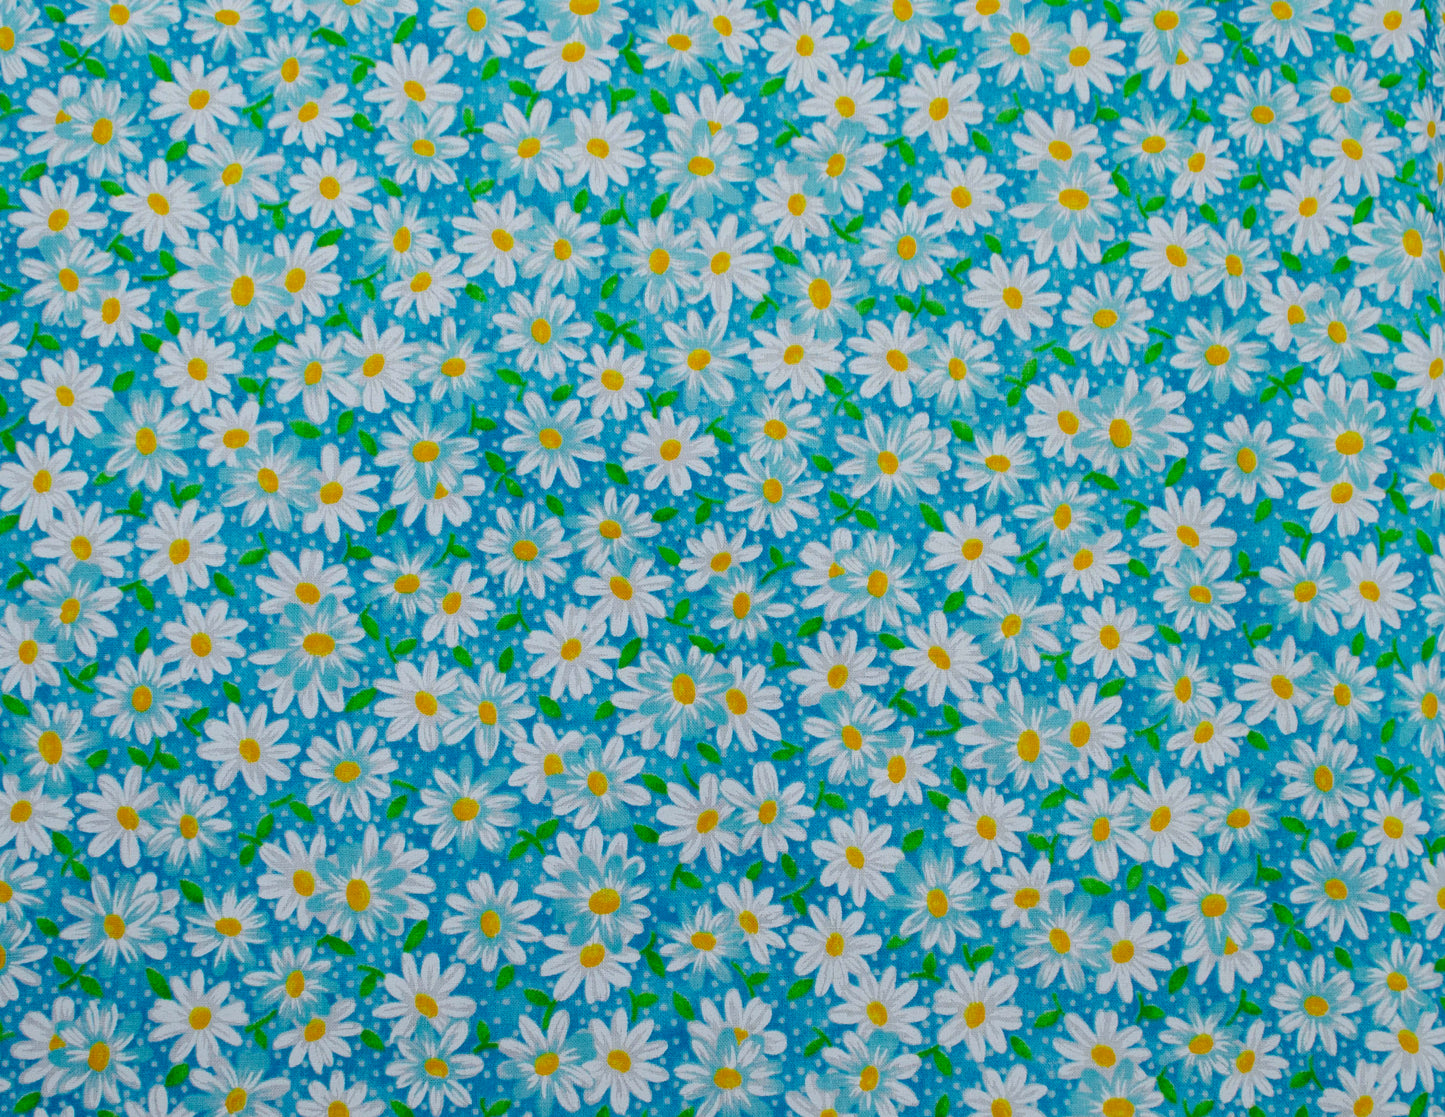 Turquoise daisies (111)